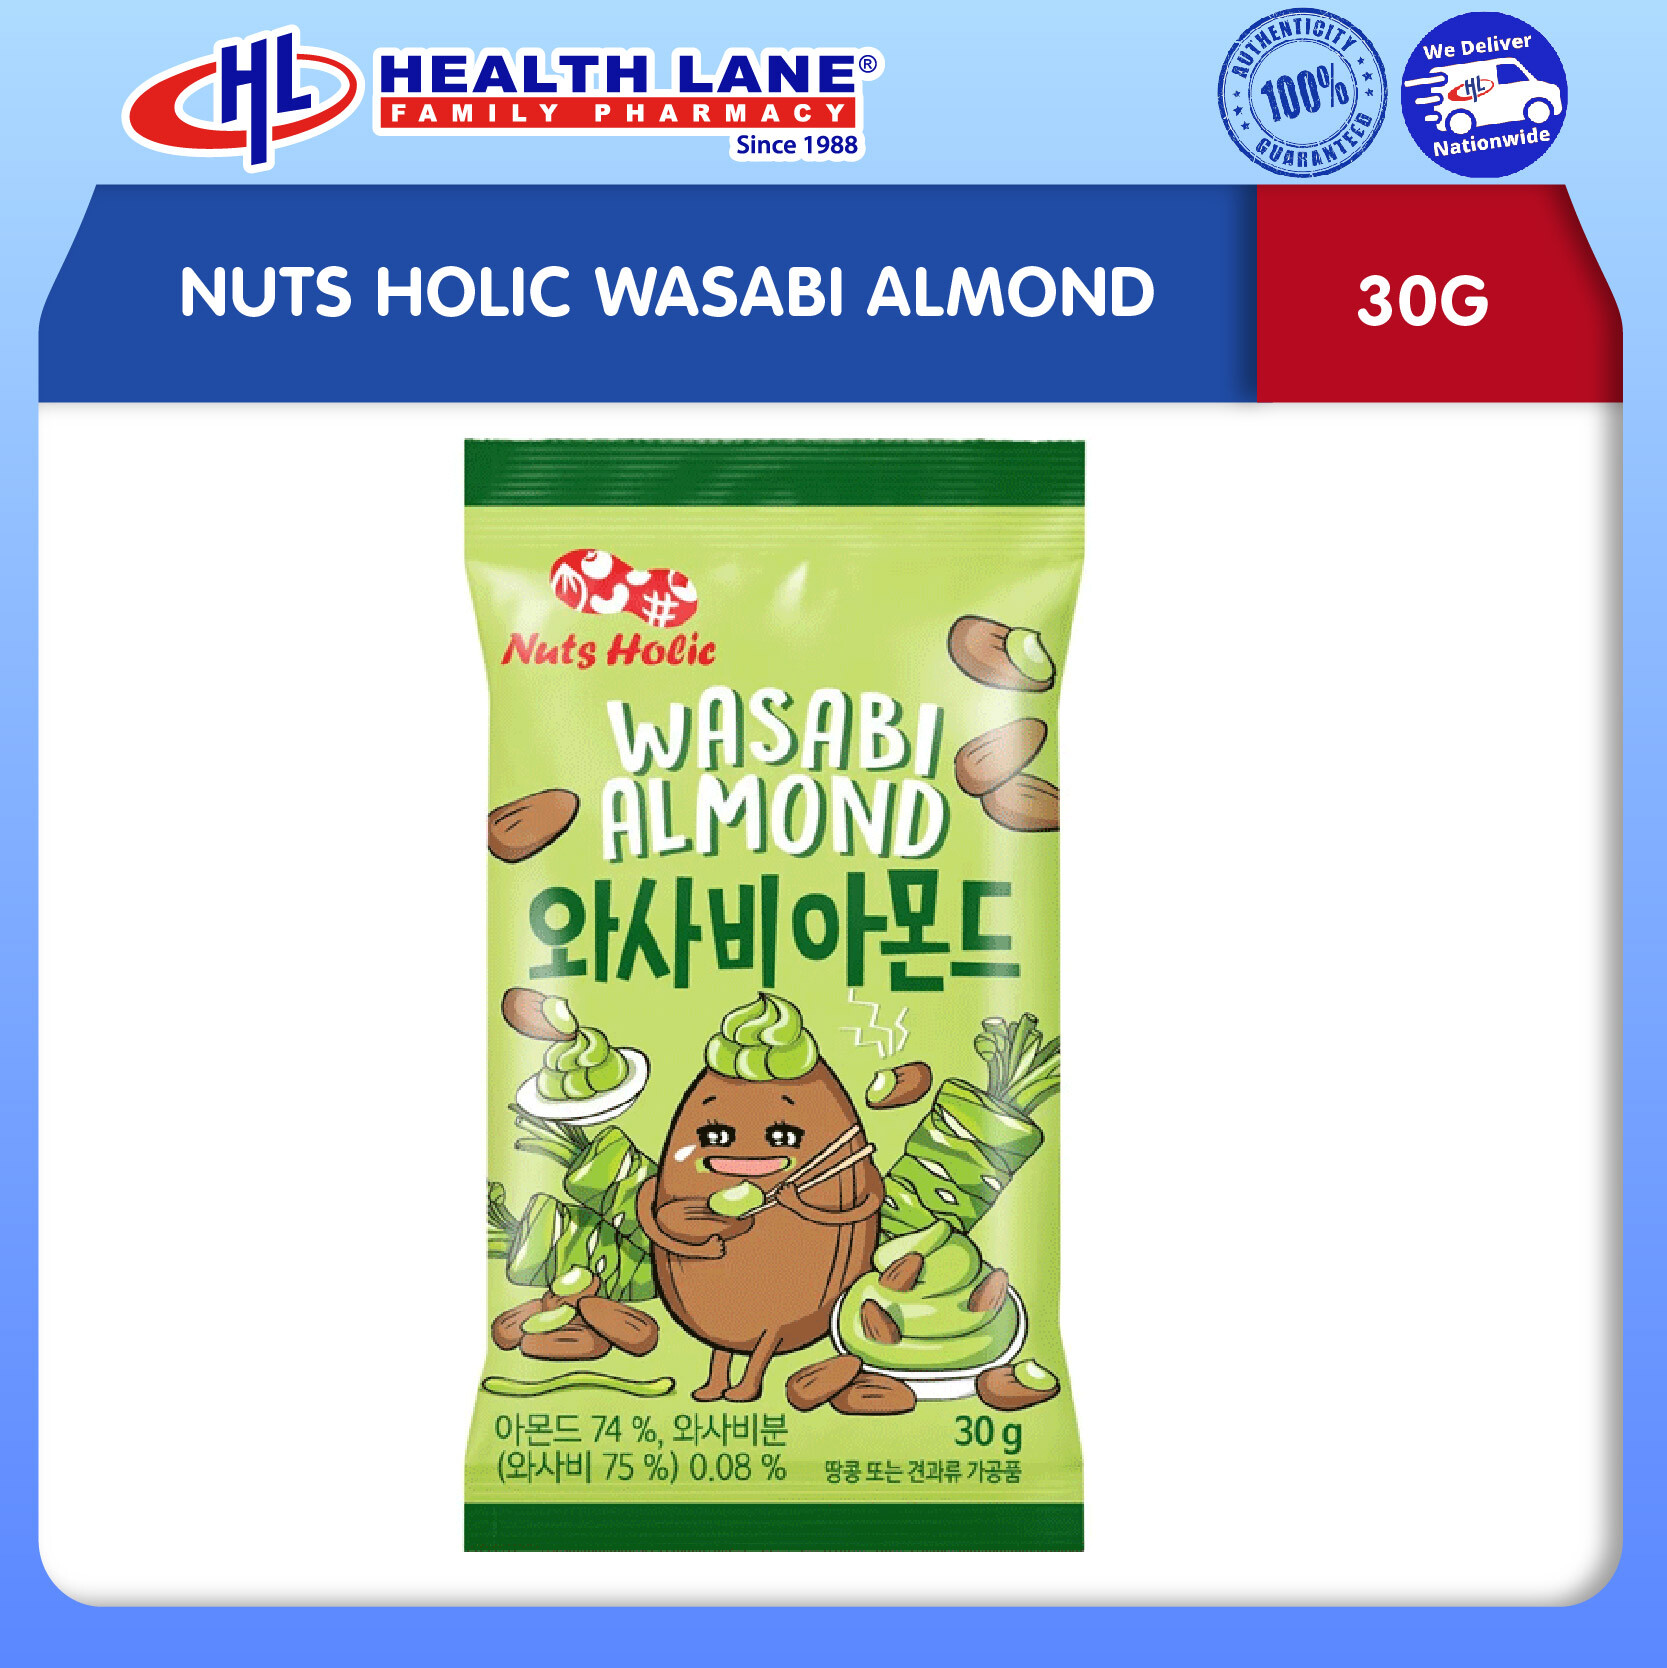 NUTS HOLIC WASABI ALMOND (30G)